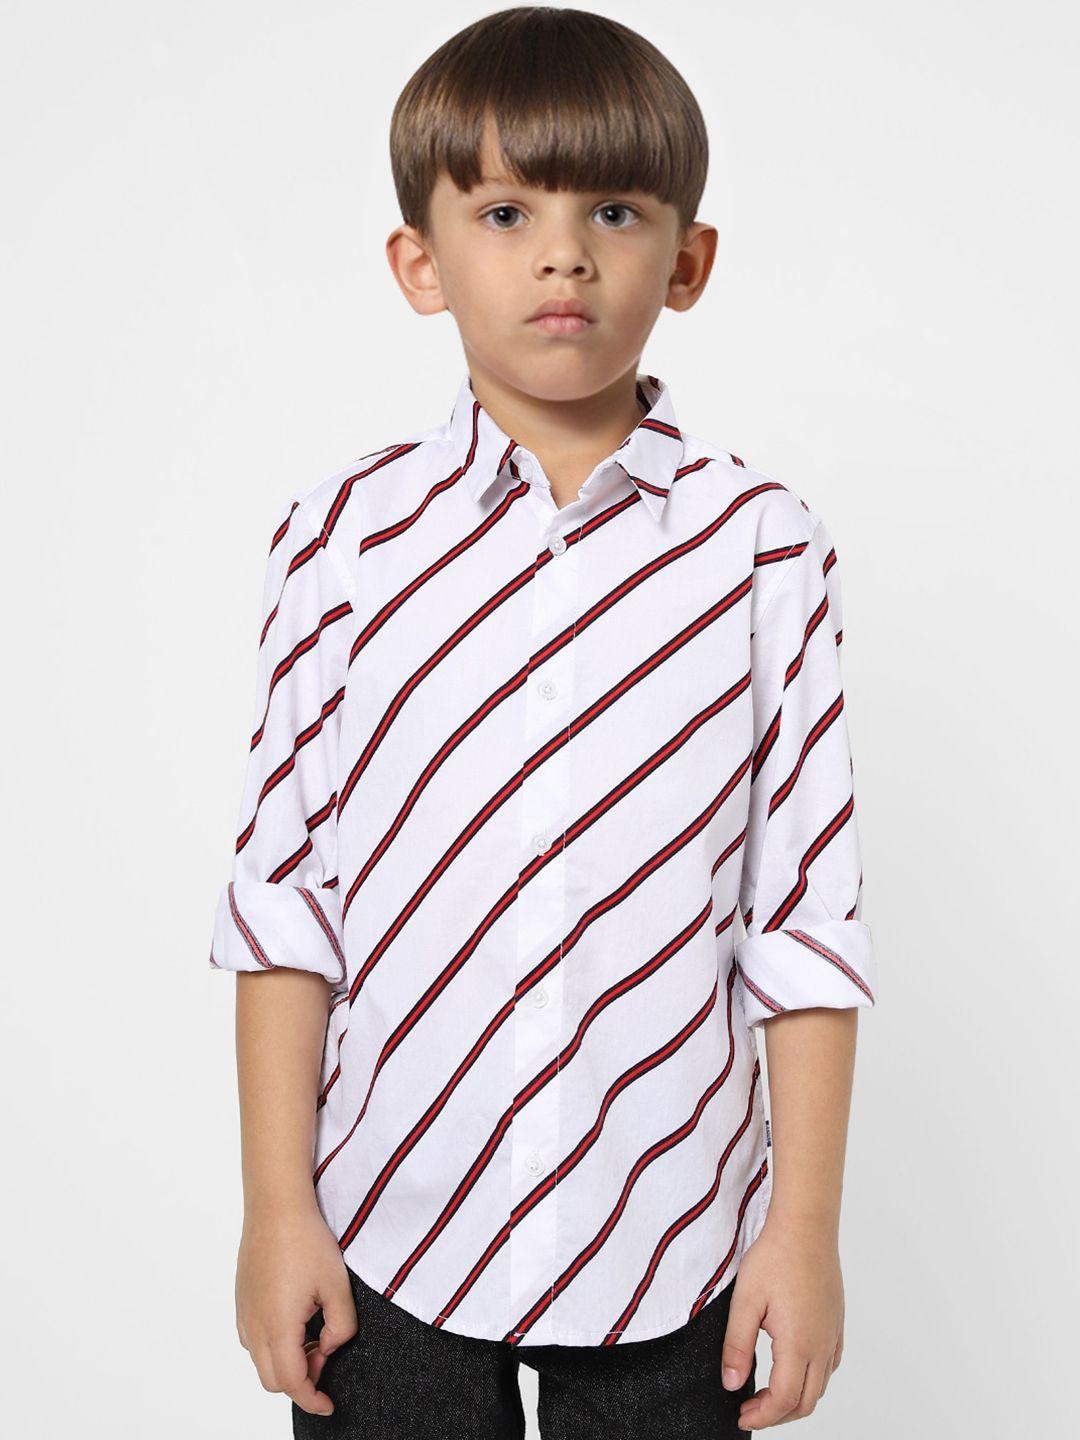 jack & jones boys white & red striped cotton casual shirt